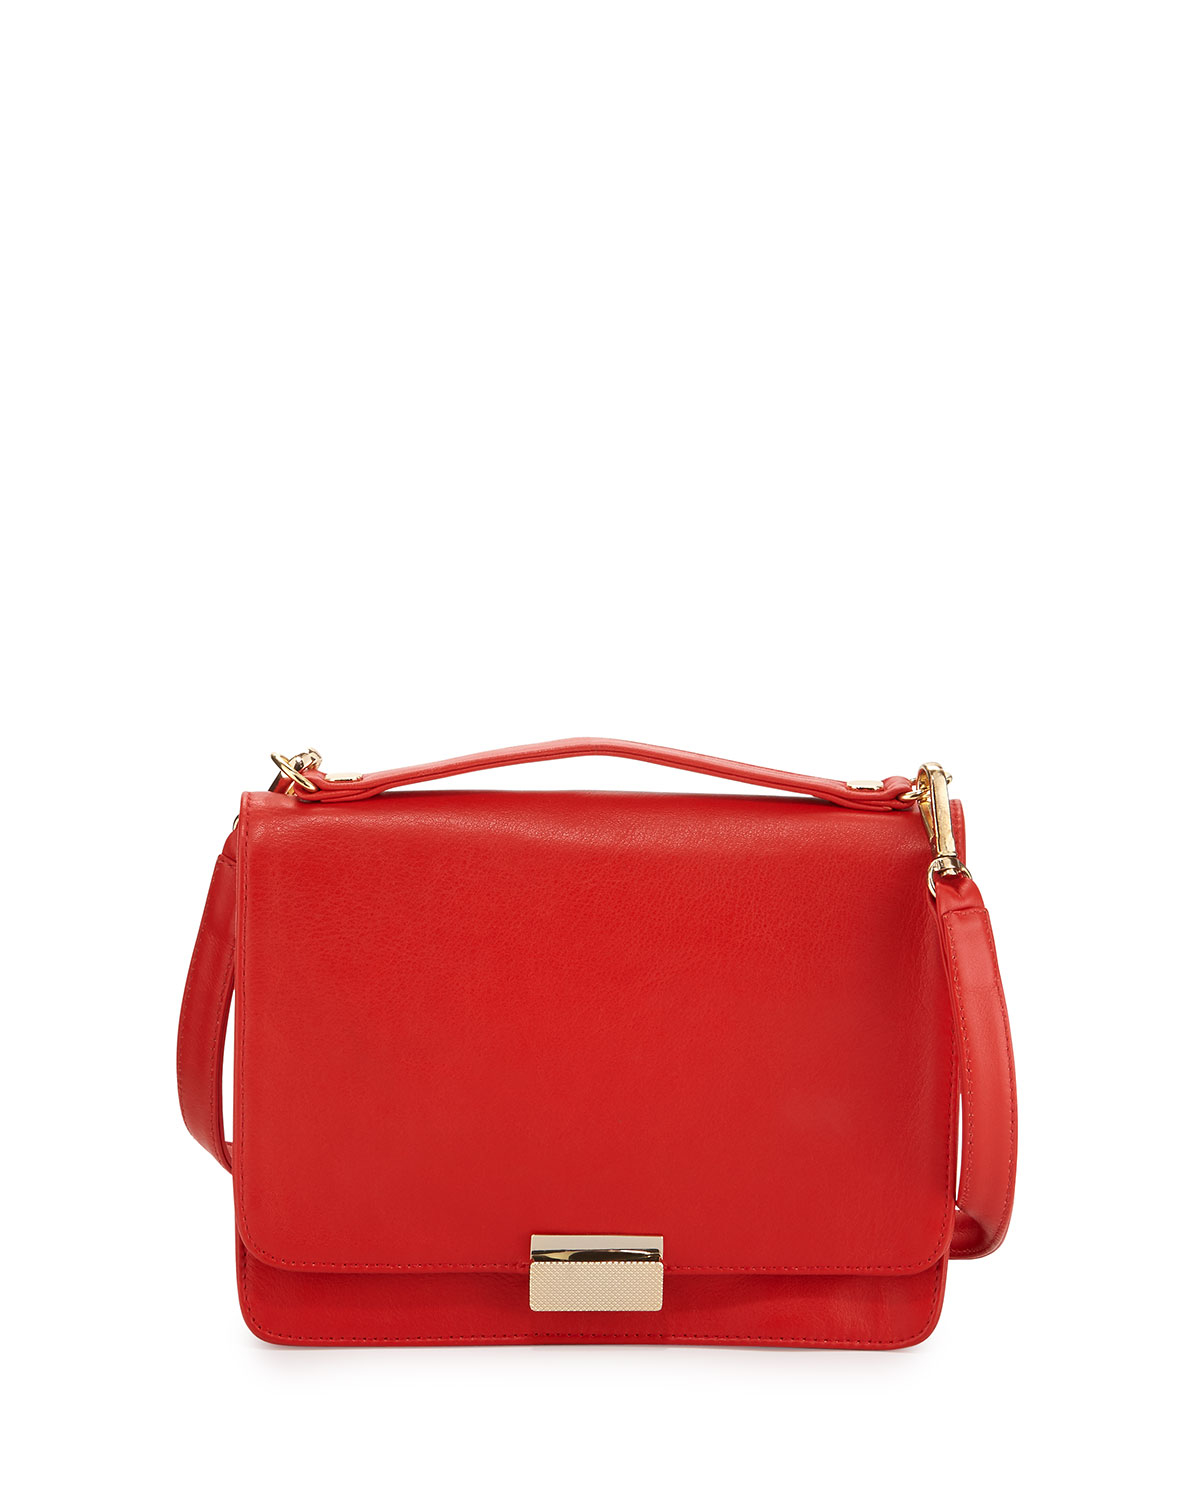 Lyst - Lauren Merkin Taylor Leather Cross-Body Bag in Red